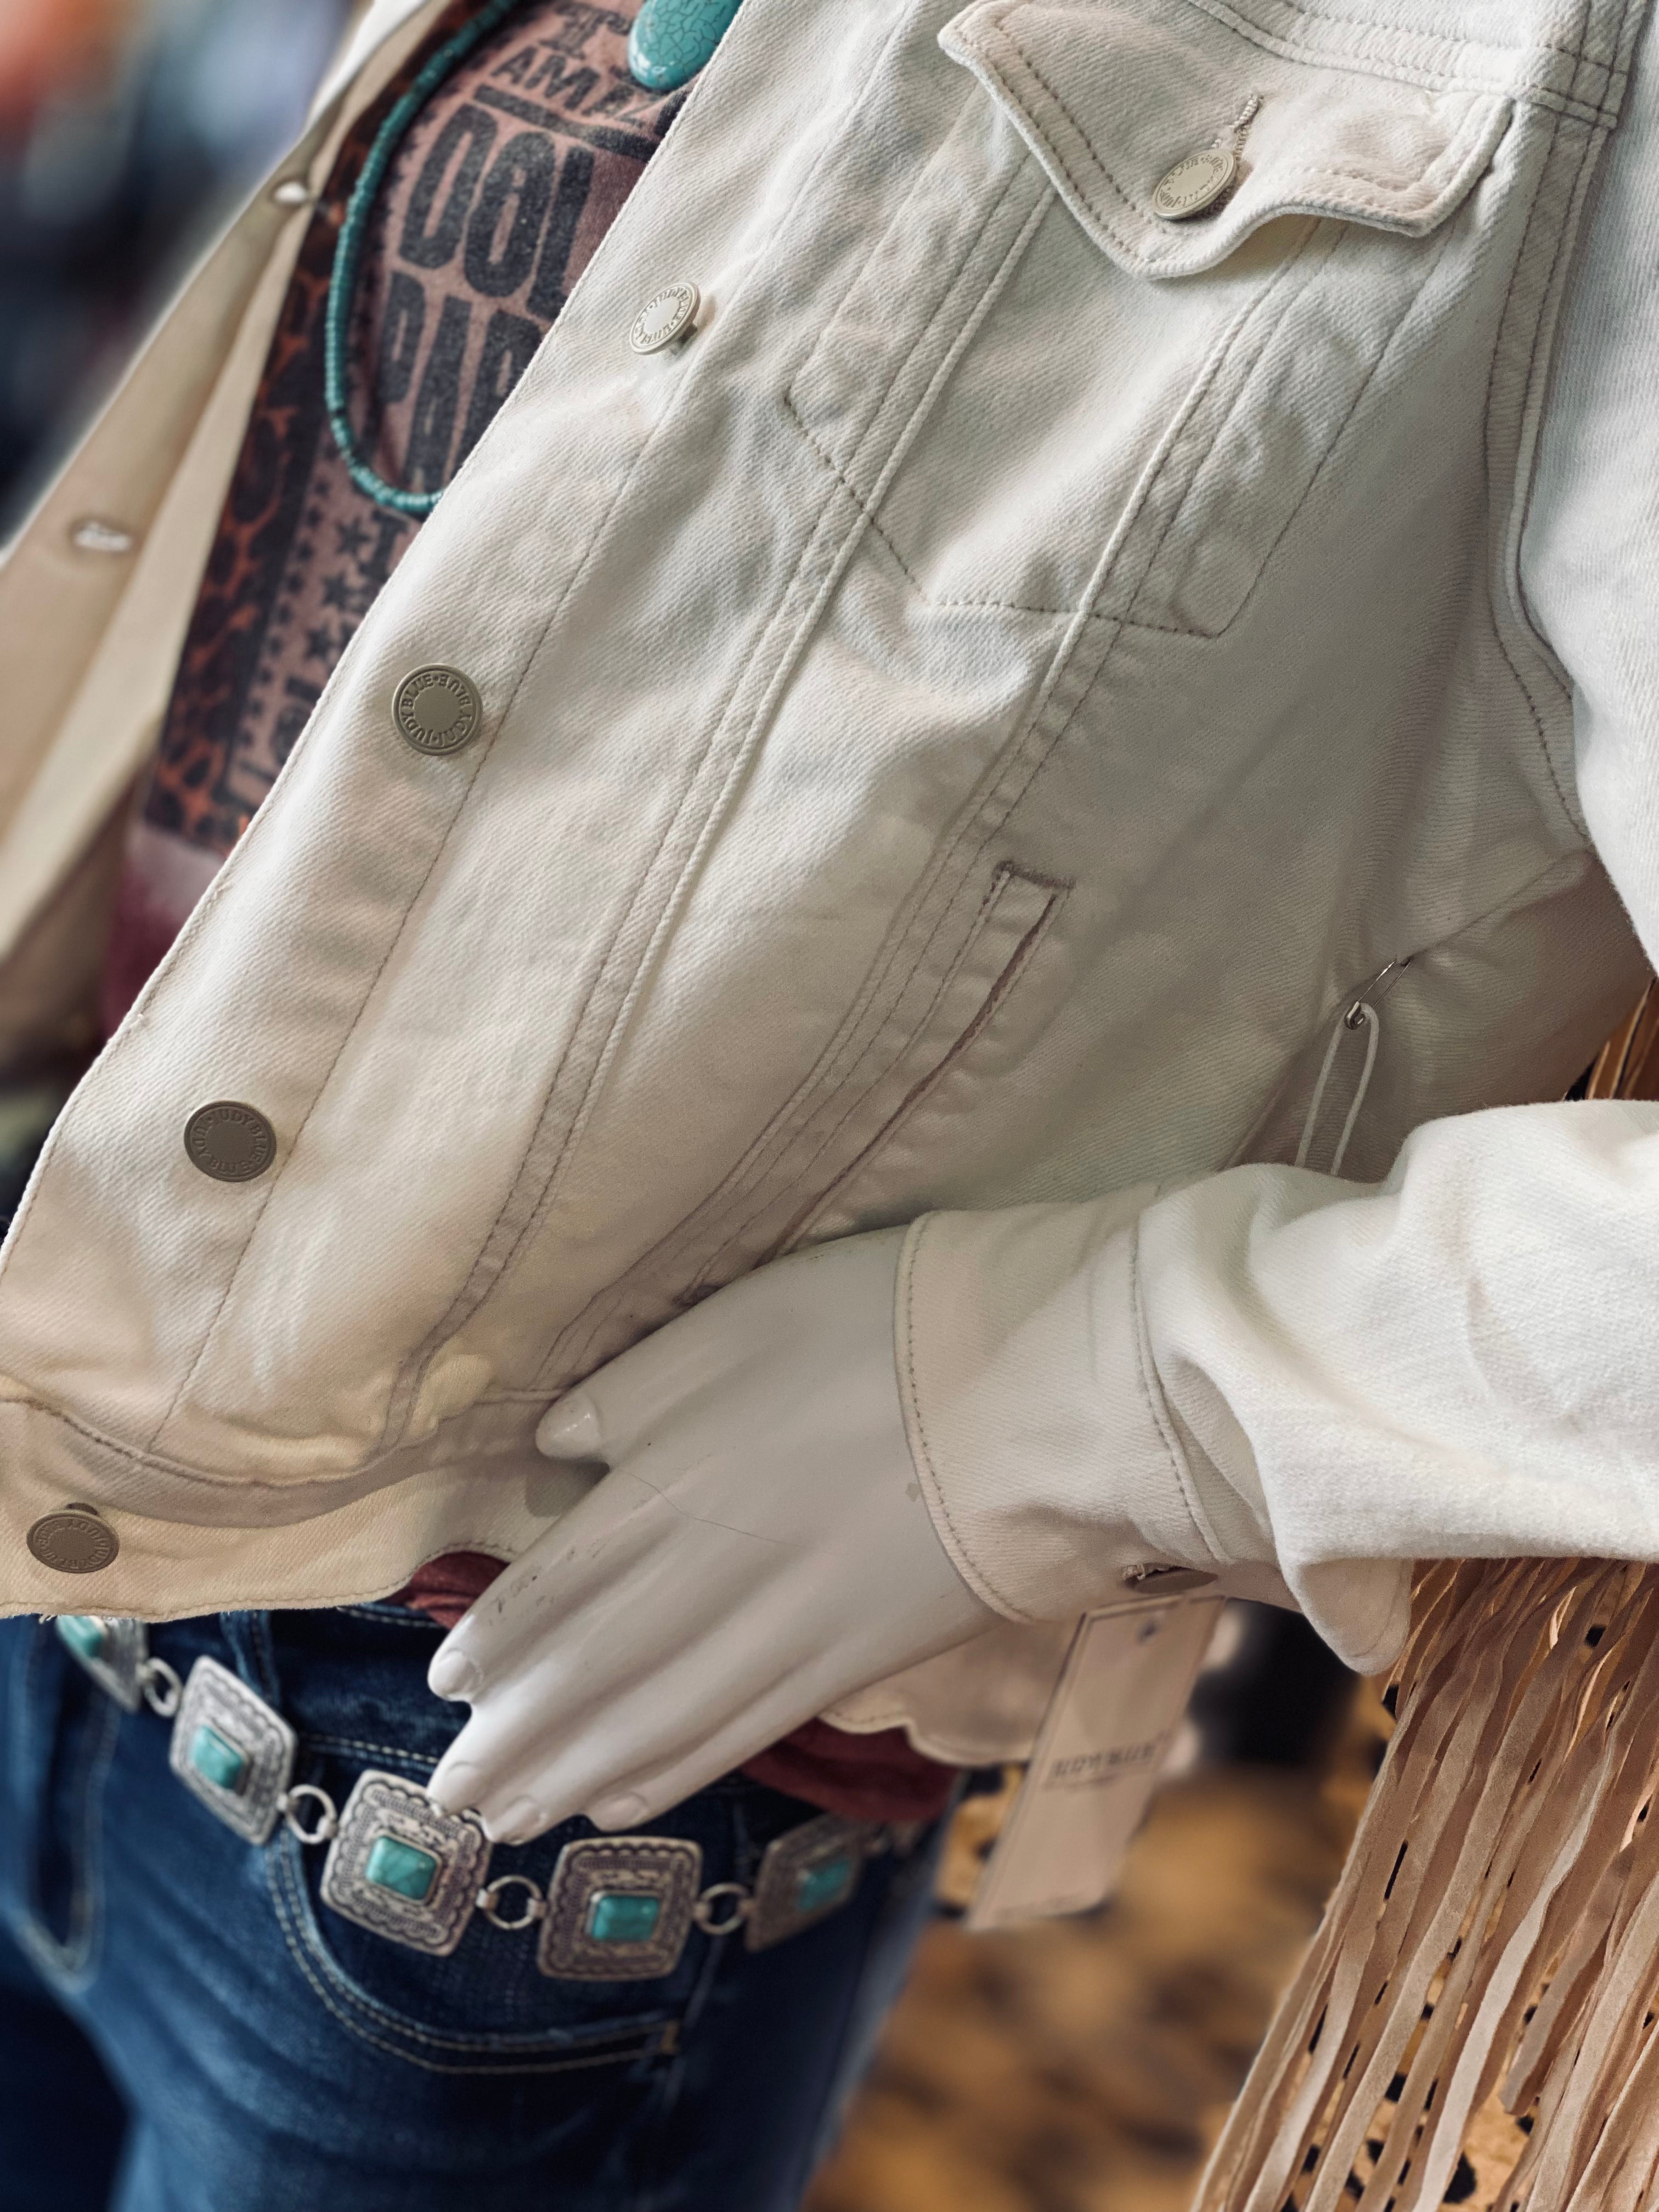 Judy Blue Button Up White Denim  Jacket w/Fringe on Sleeves and Back